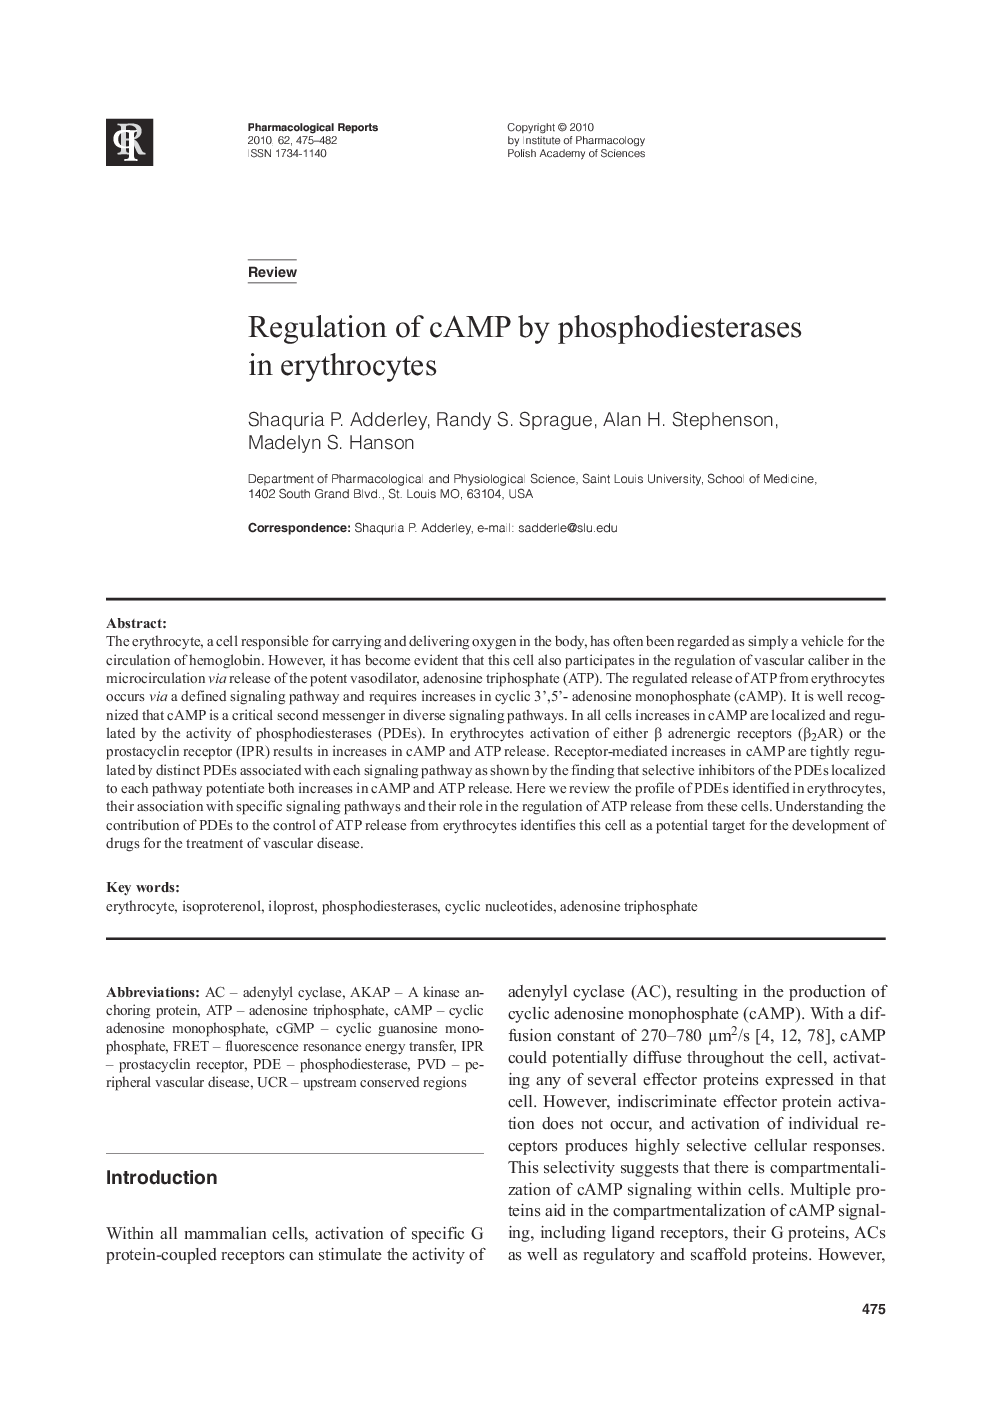 Regulation of cAMP by phosphodiesterases in erythrocytes